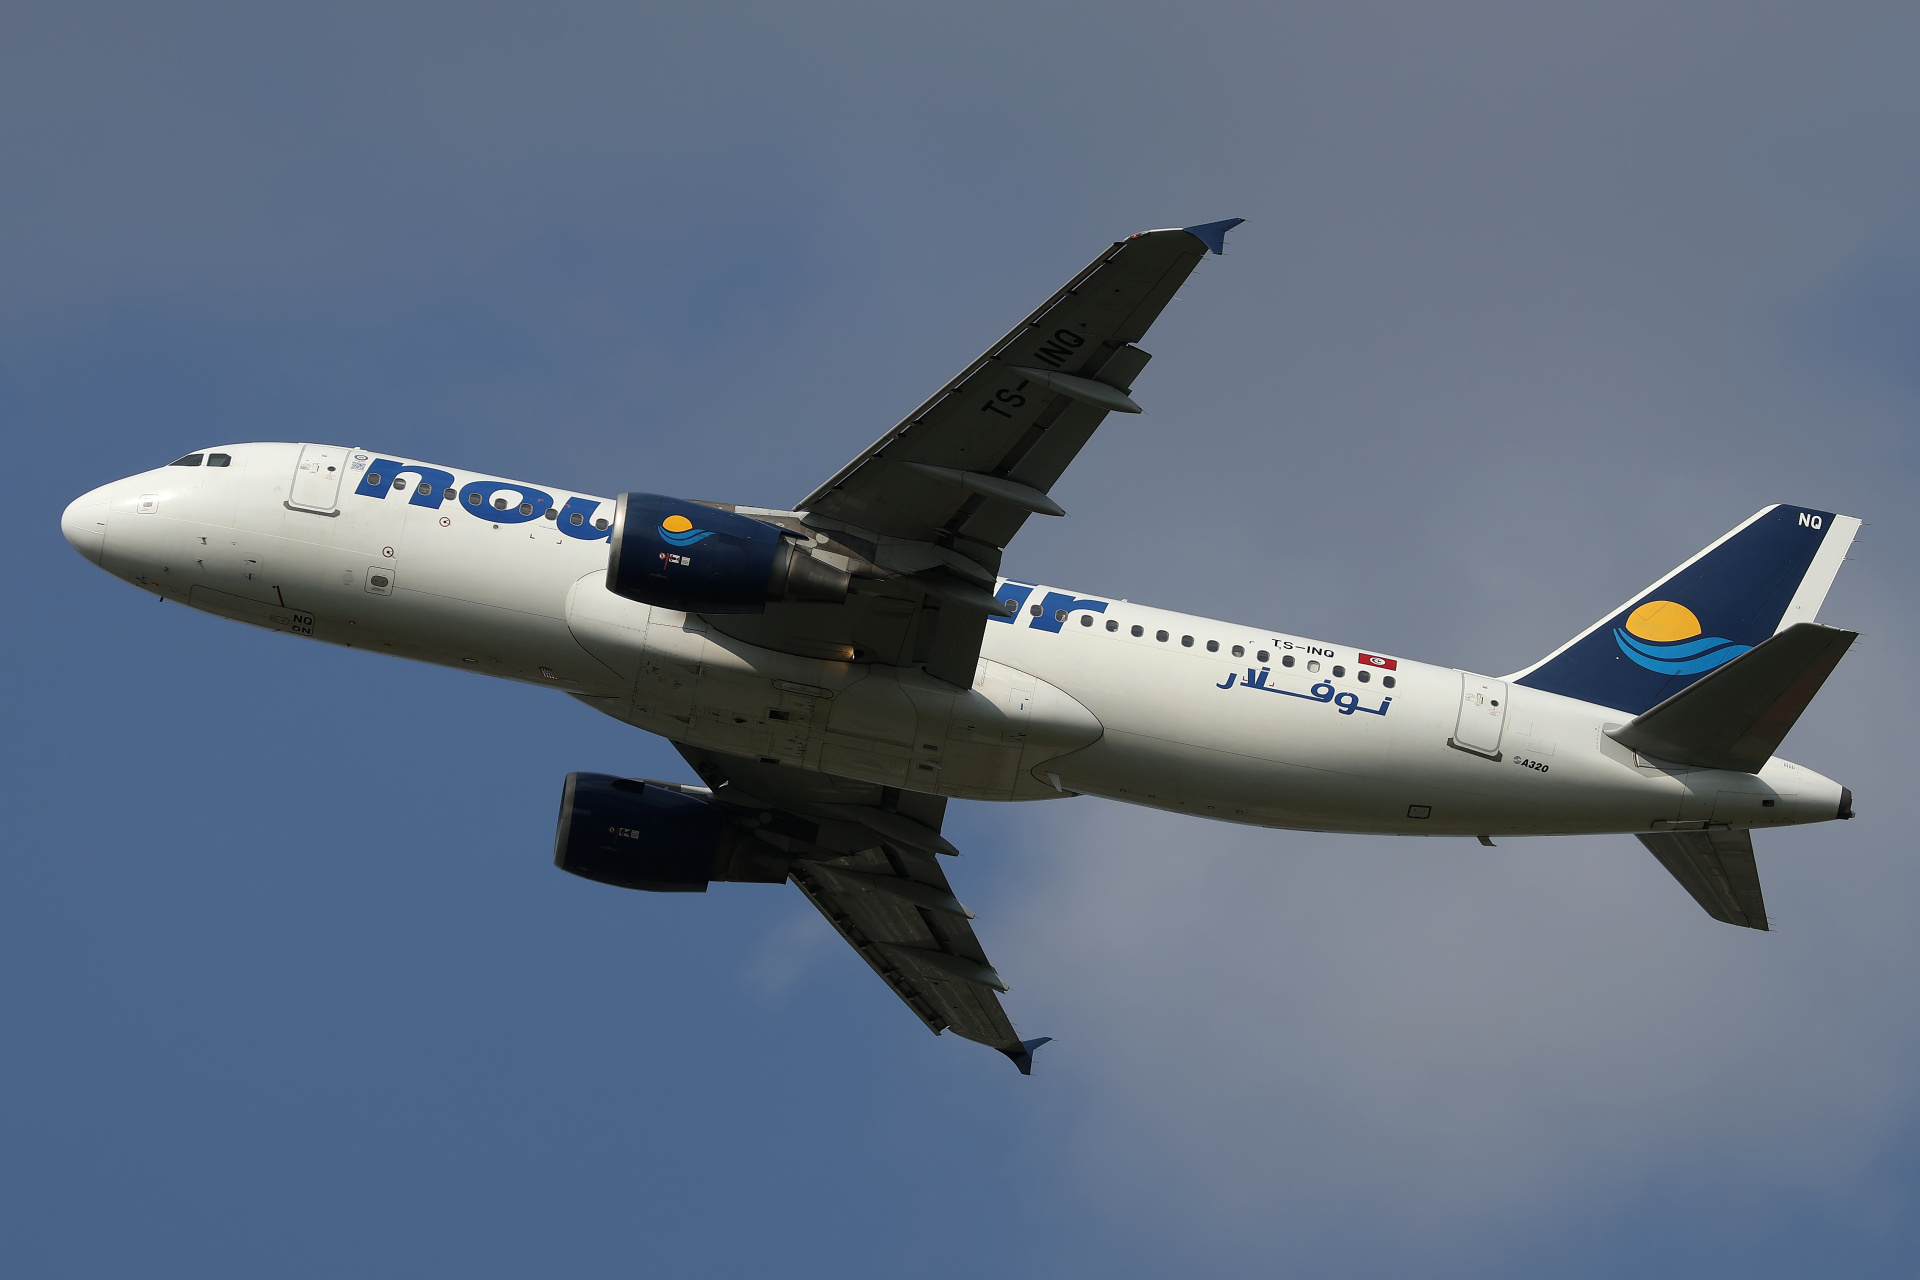 TS-INQ (Aircraft » EPWA Spotting » Airbus A320-200 » Nouvelair)